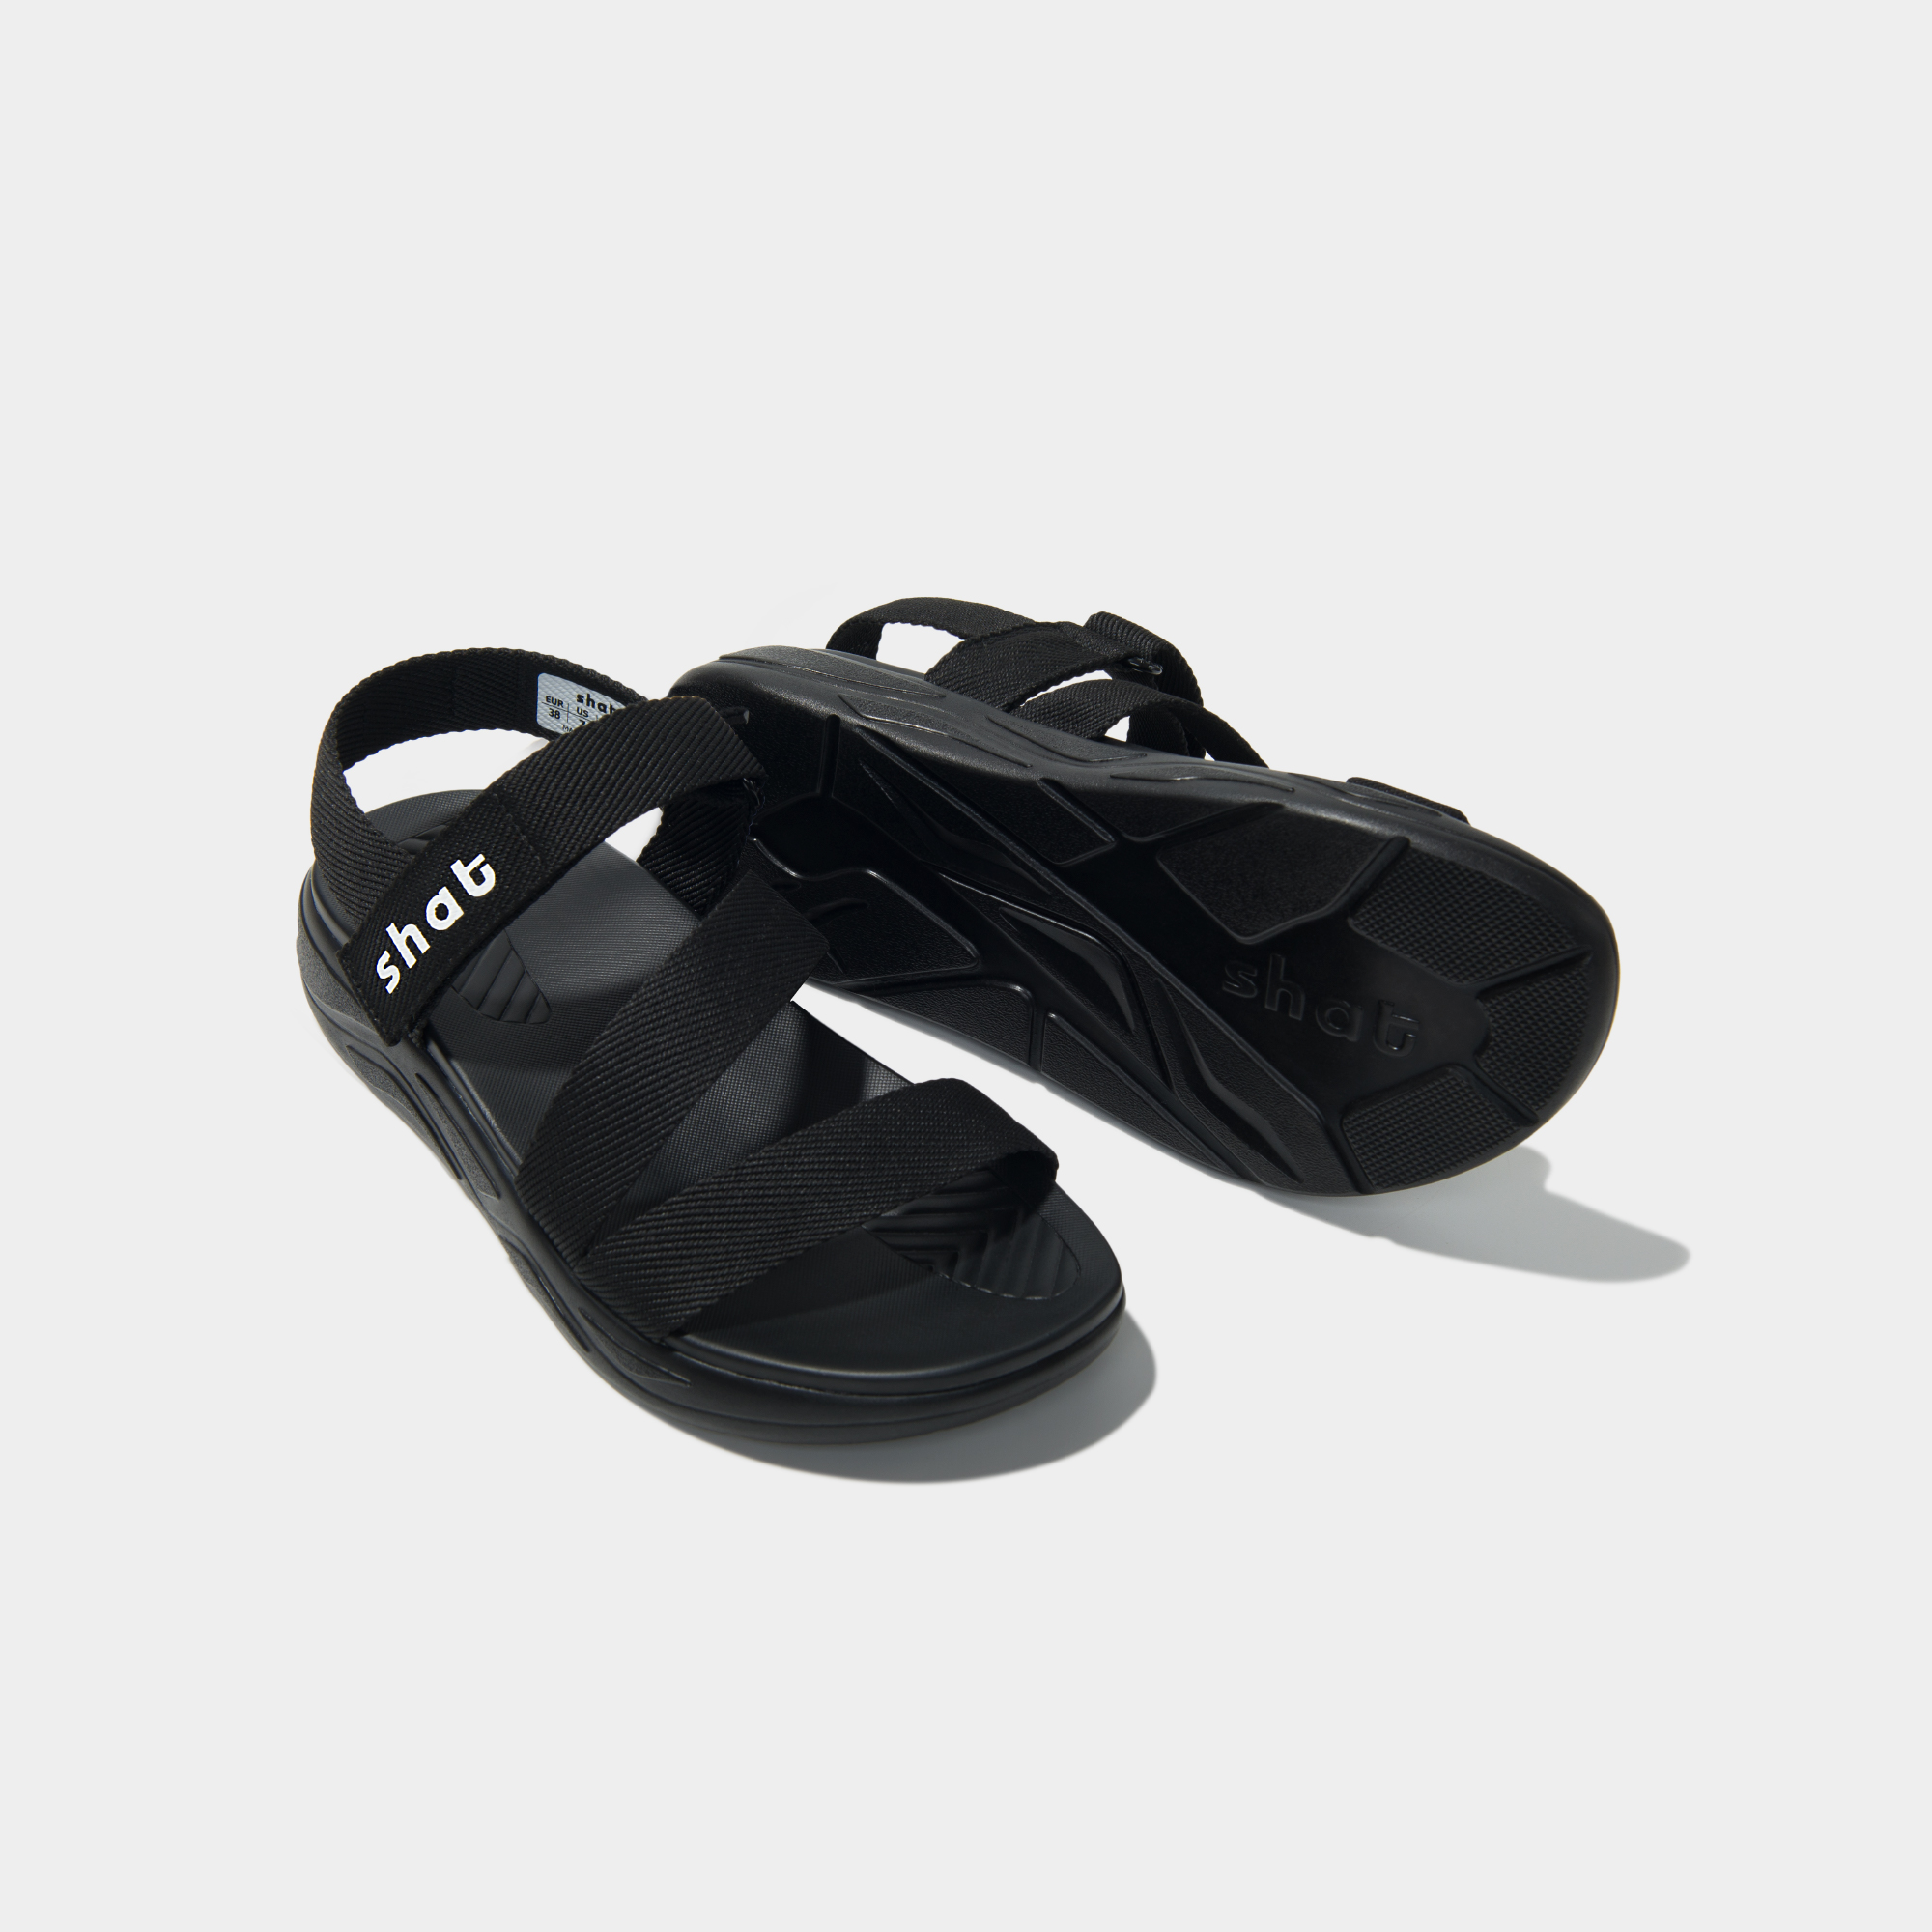 Giày Sandals Unisex Thời Trang Shat Full Đen S1M1010